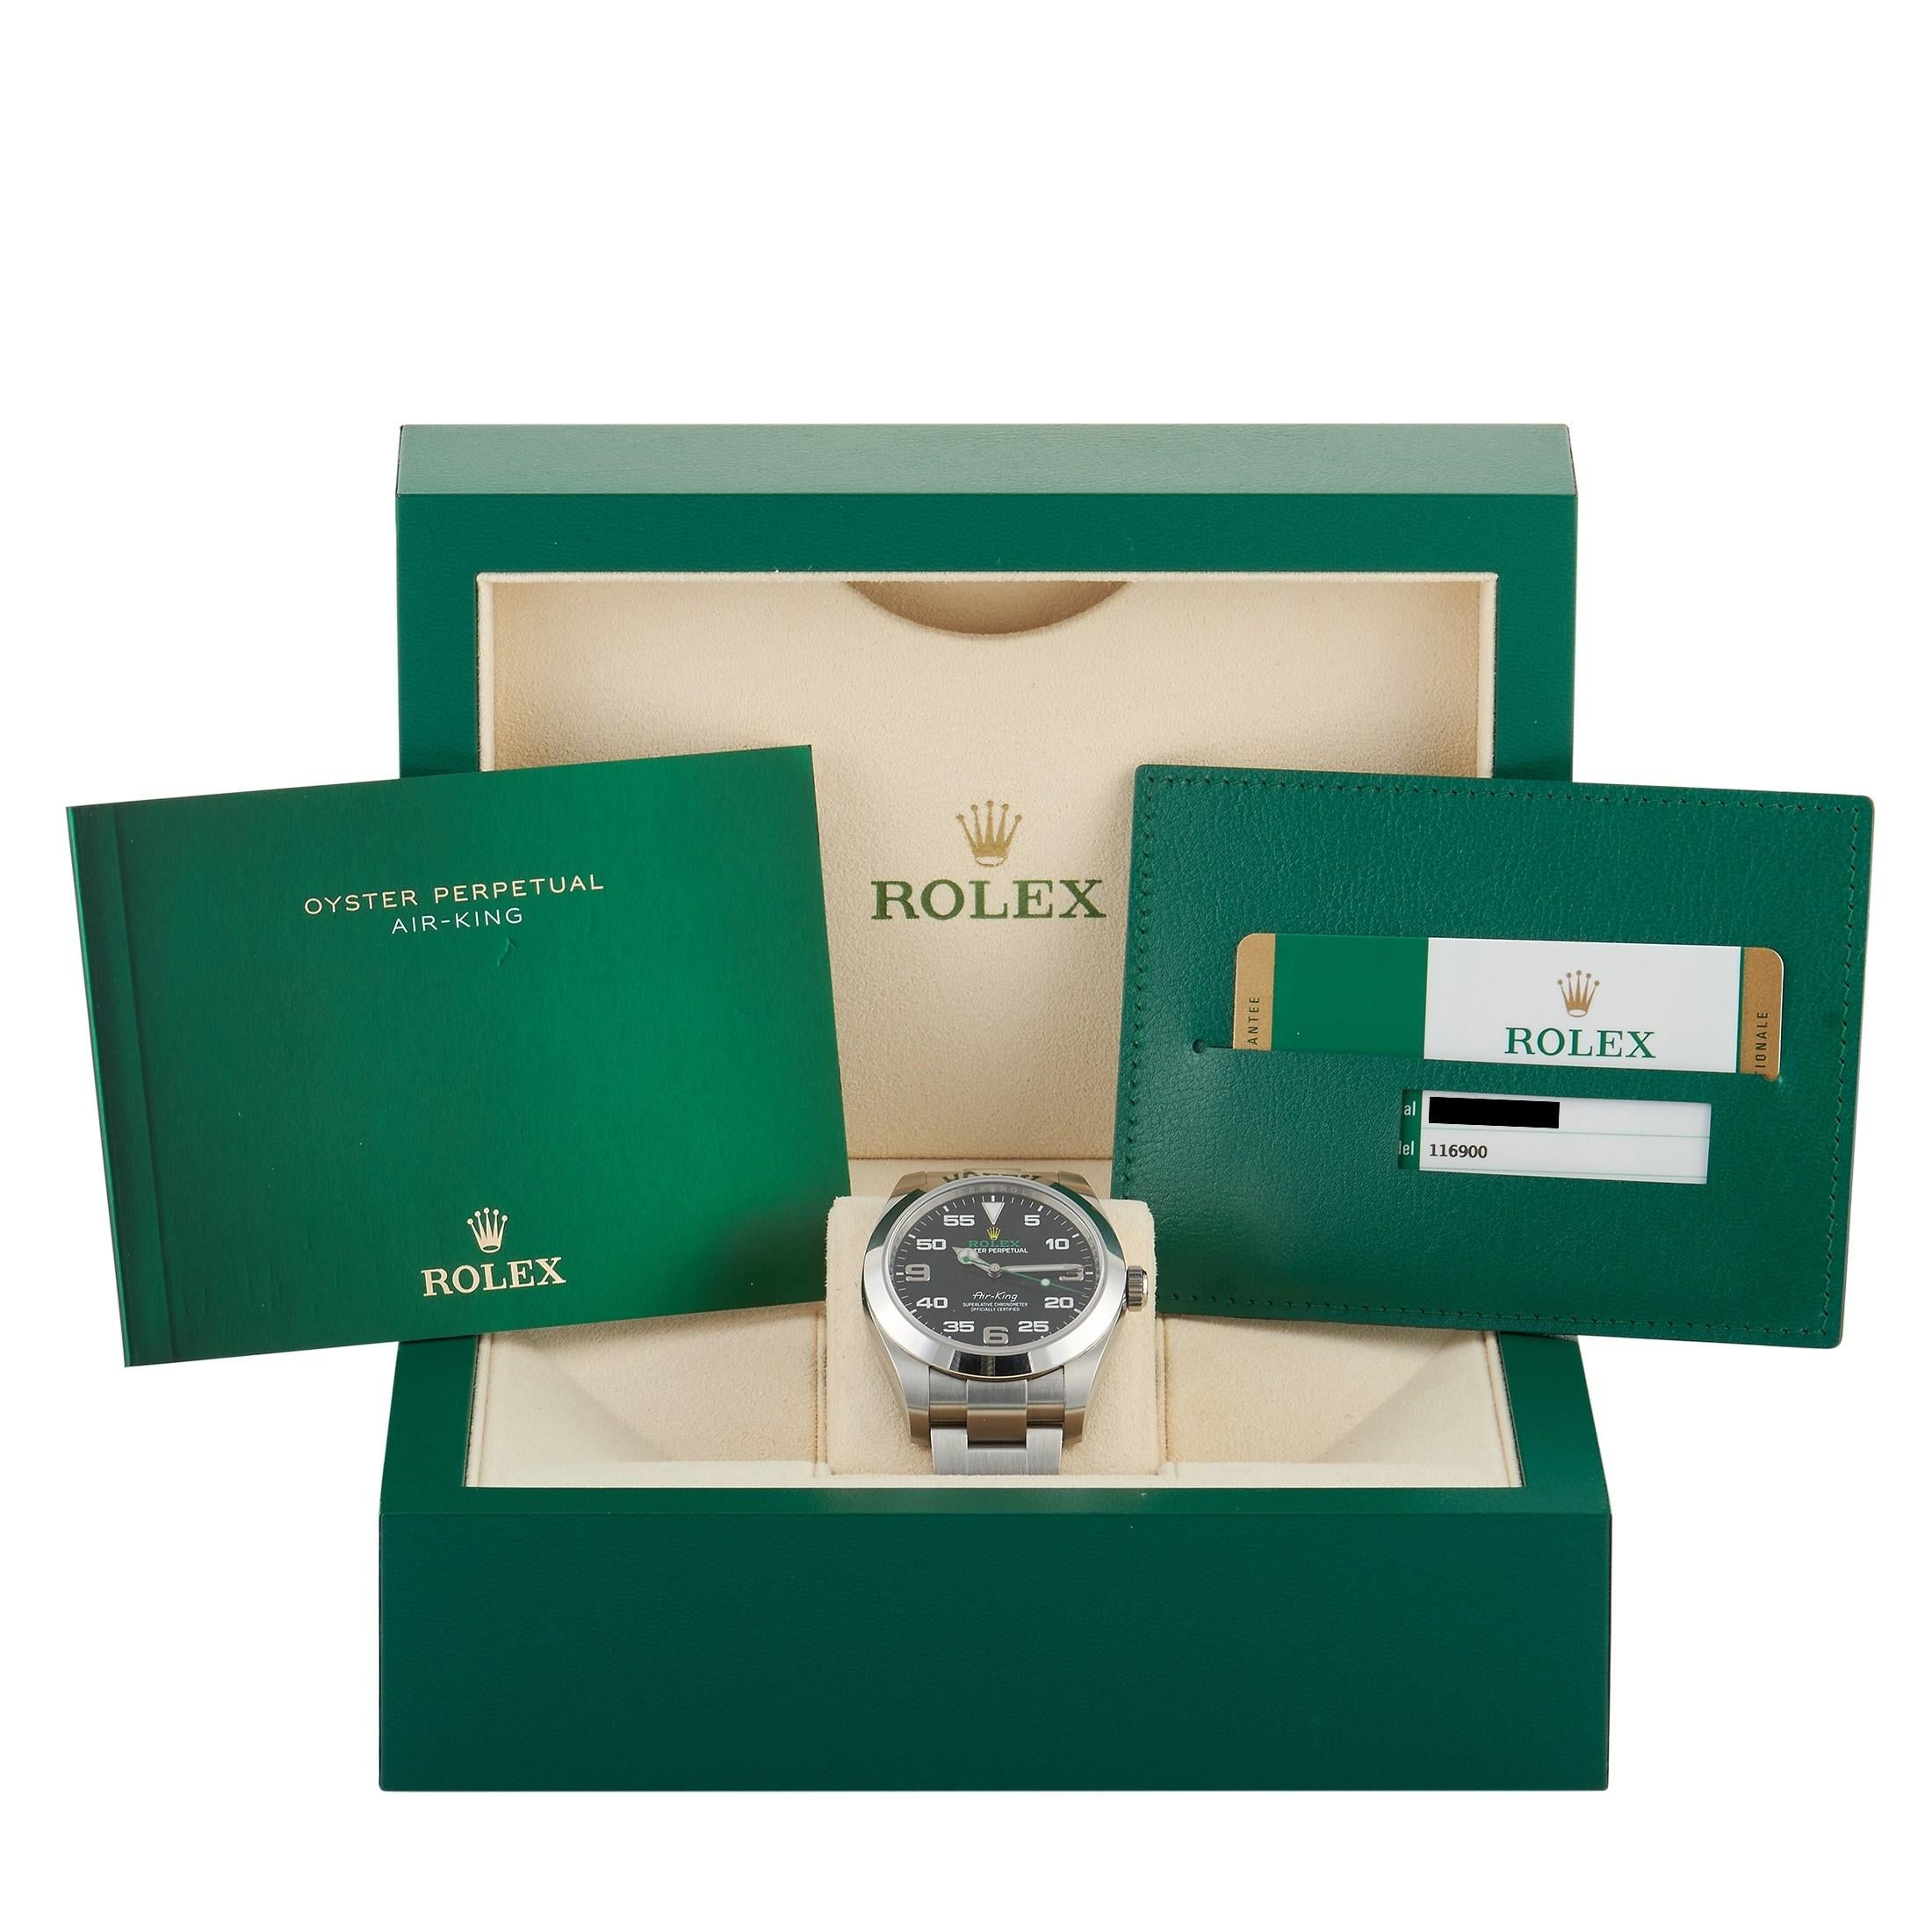 Rolex Air-King Watch 116900 1